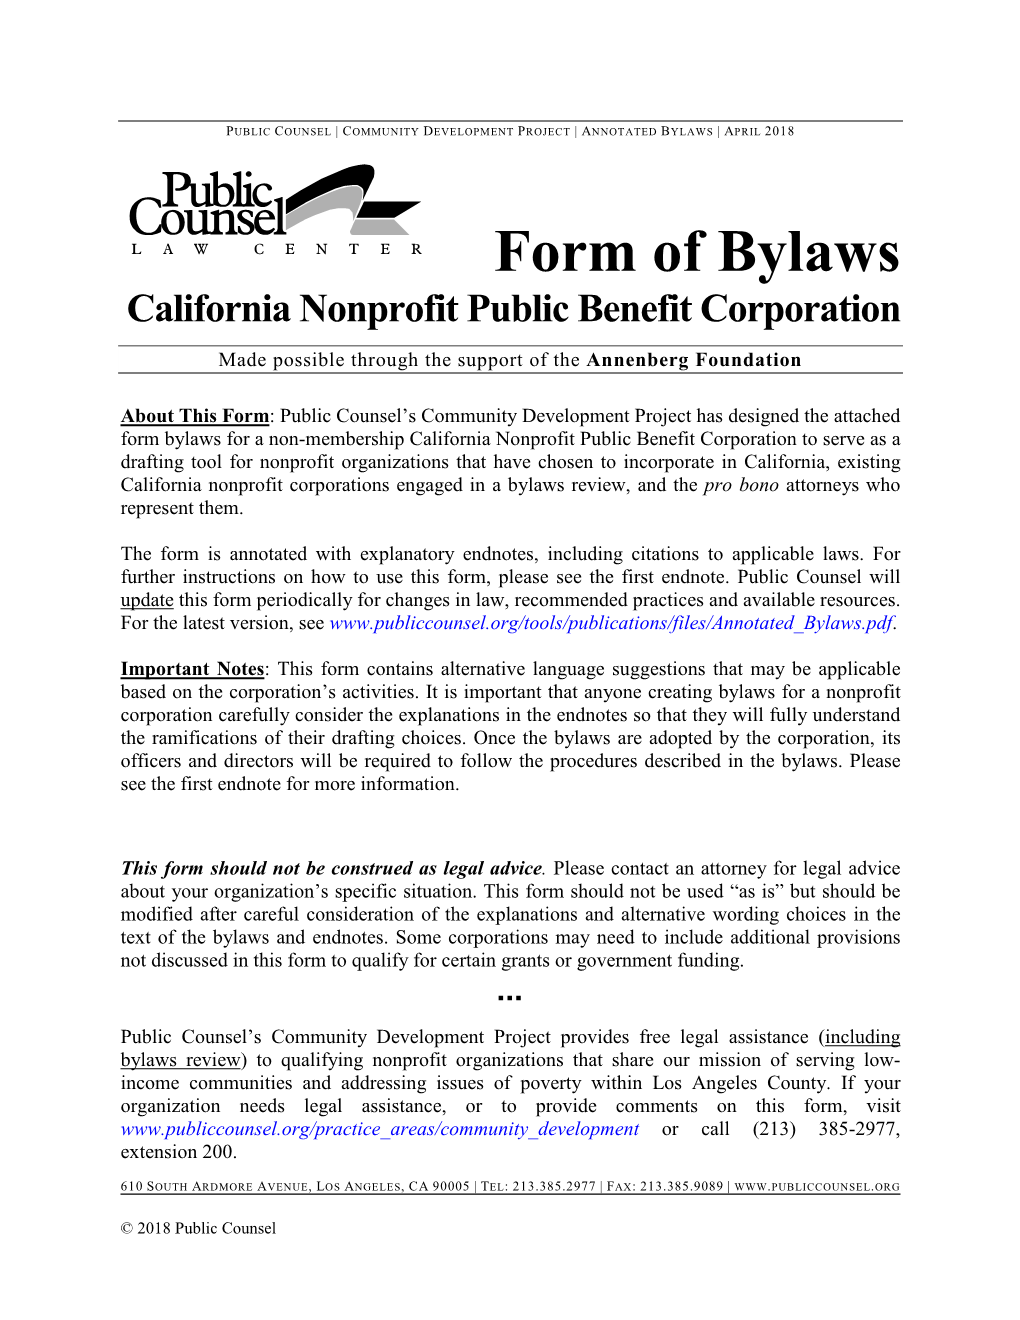 California Nonprofit Public Benefit Corporation